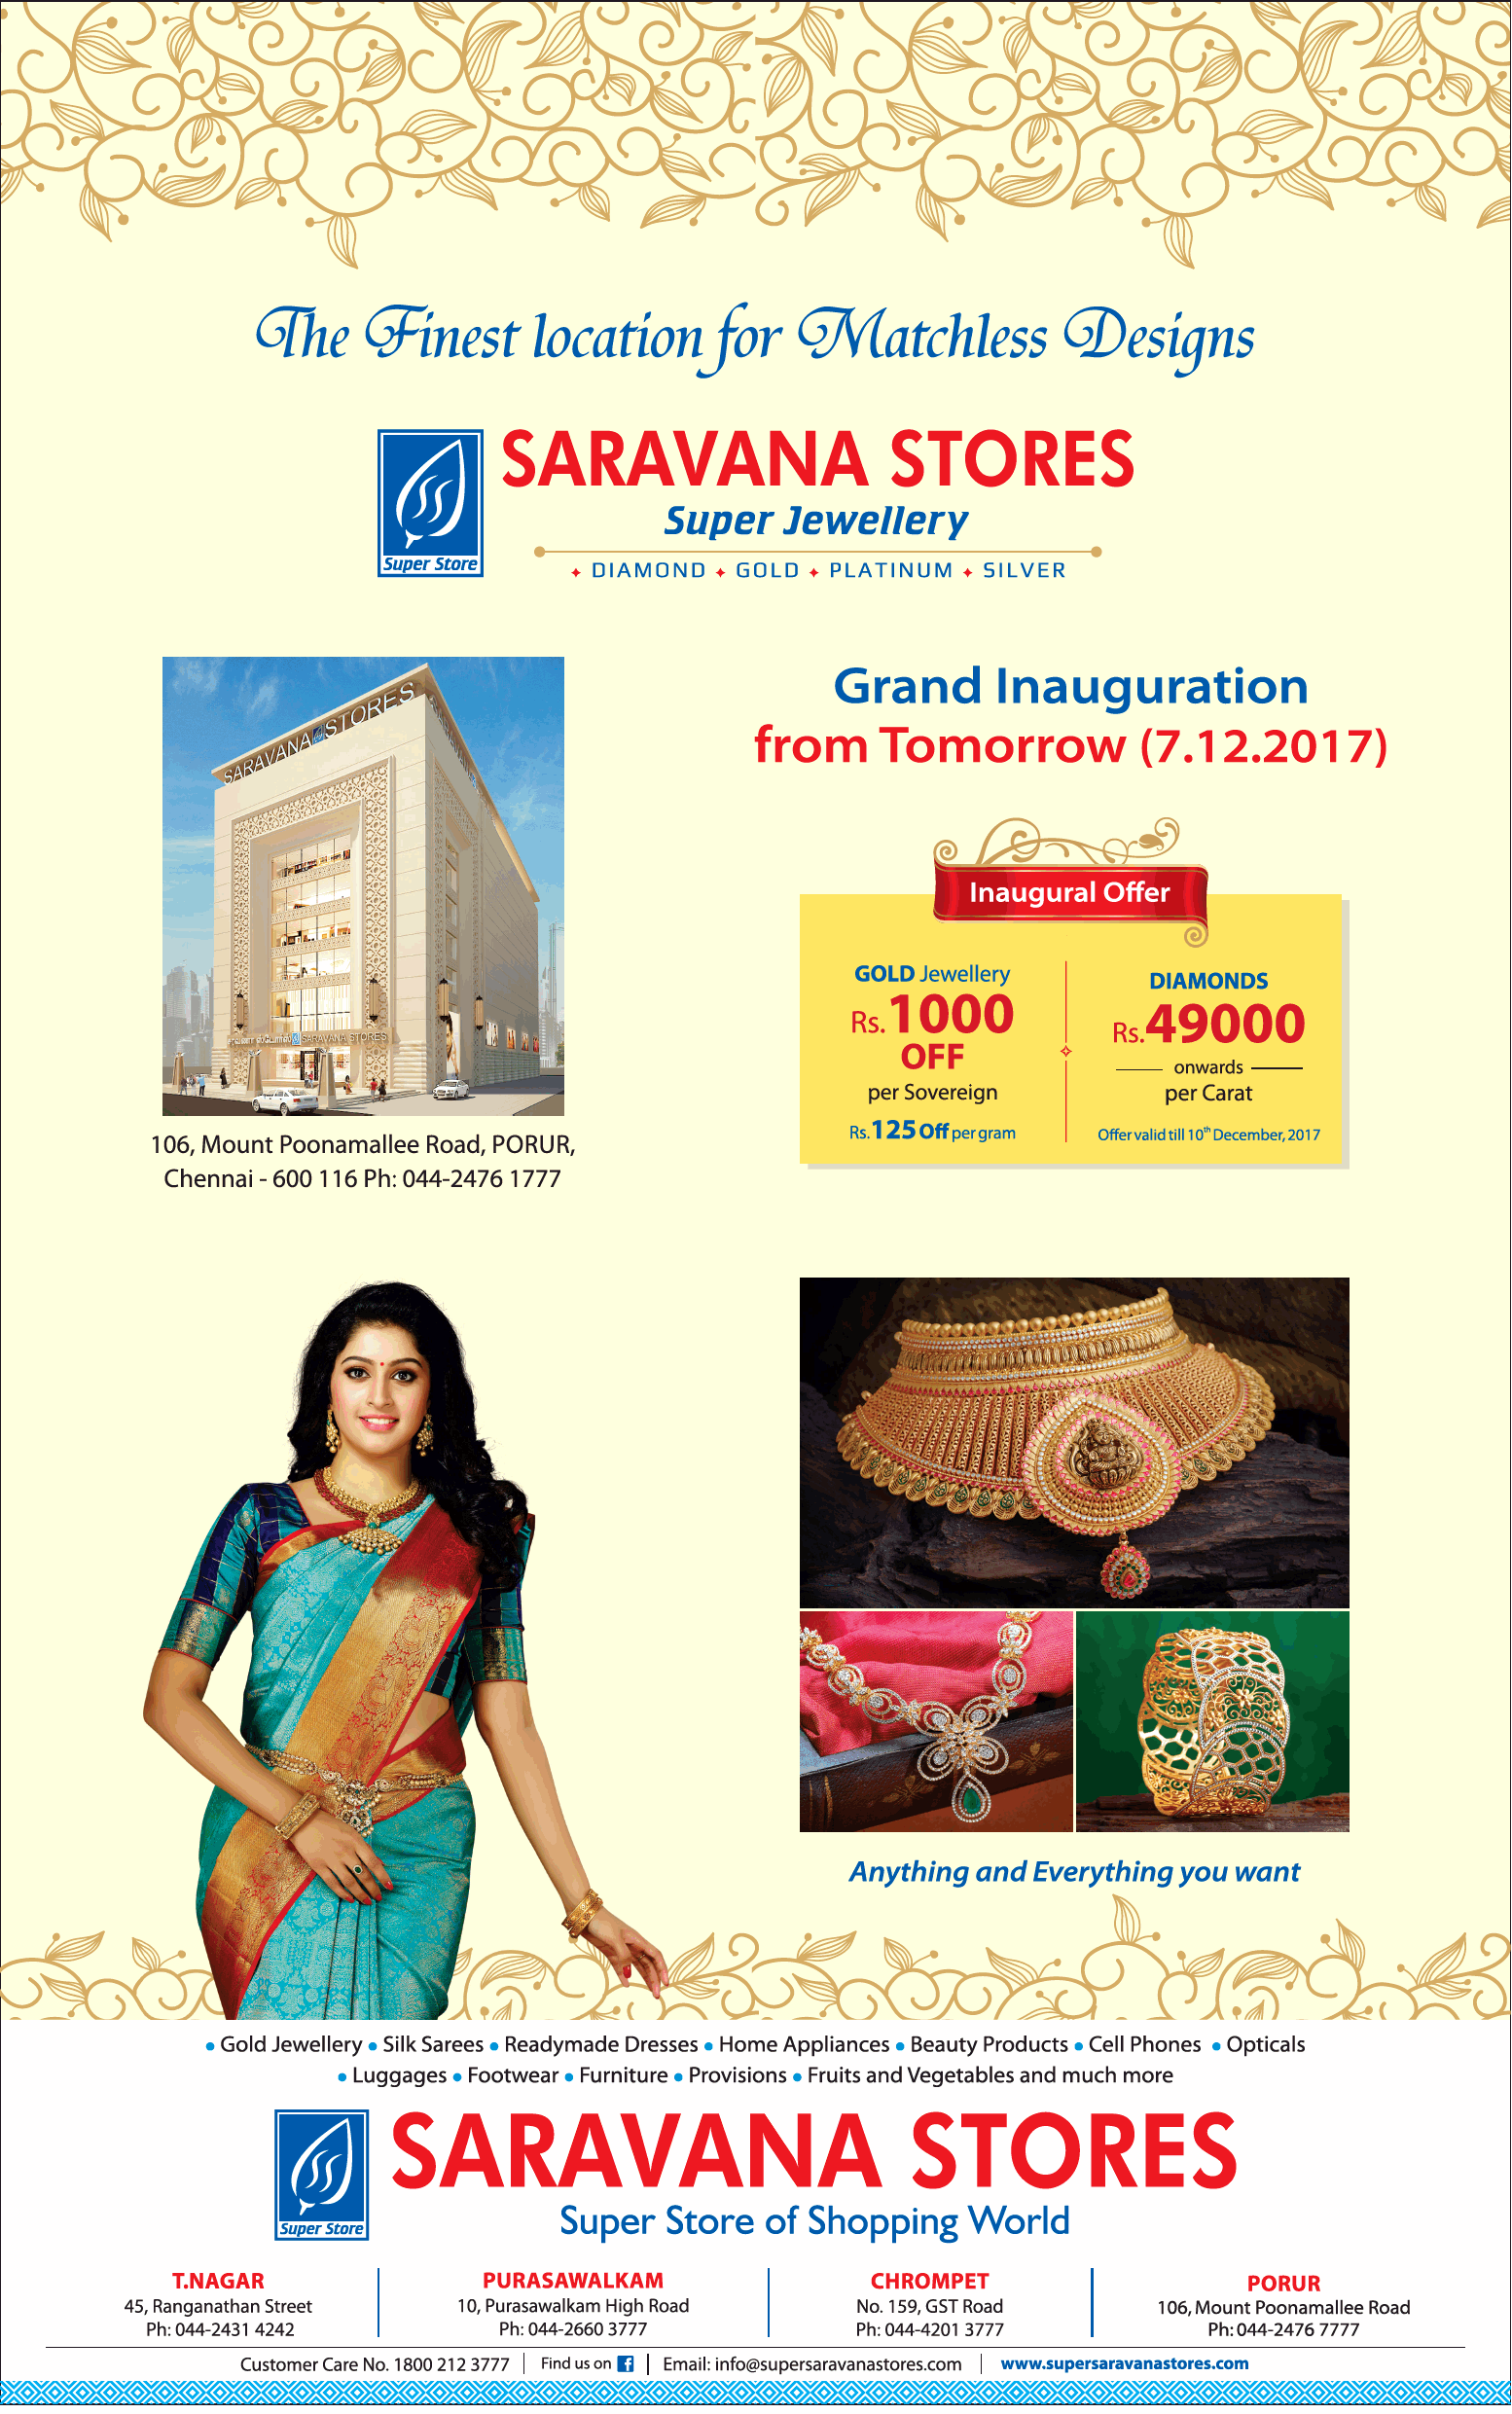 Home Appliances - Saravana Stores